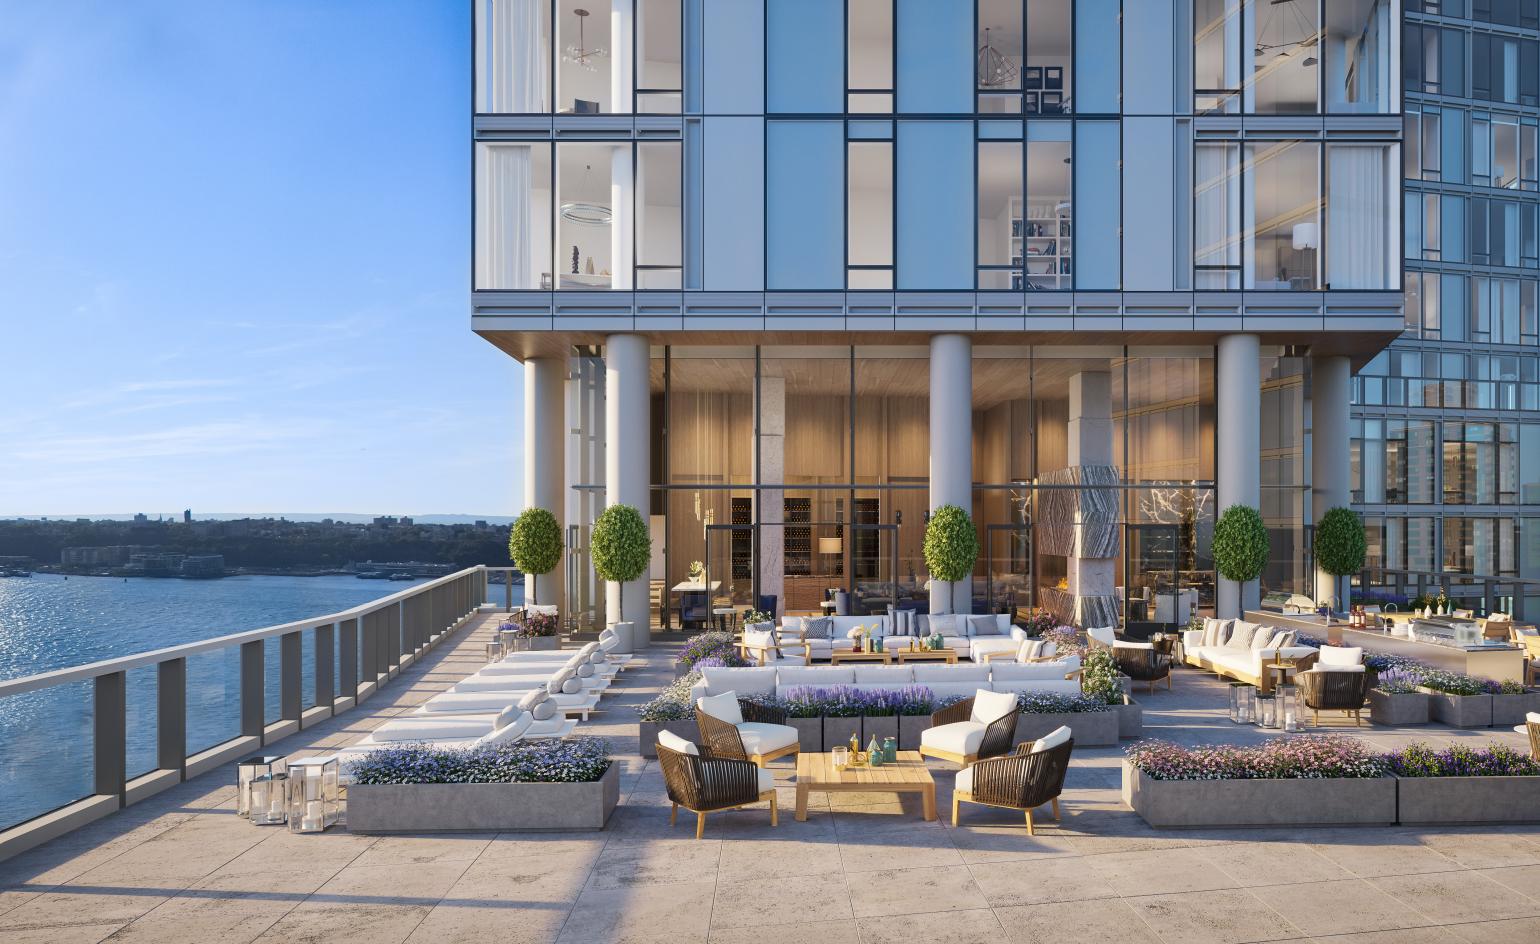 New York City’s latest crop of luxury residential developments-11